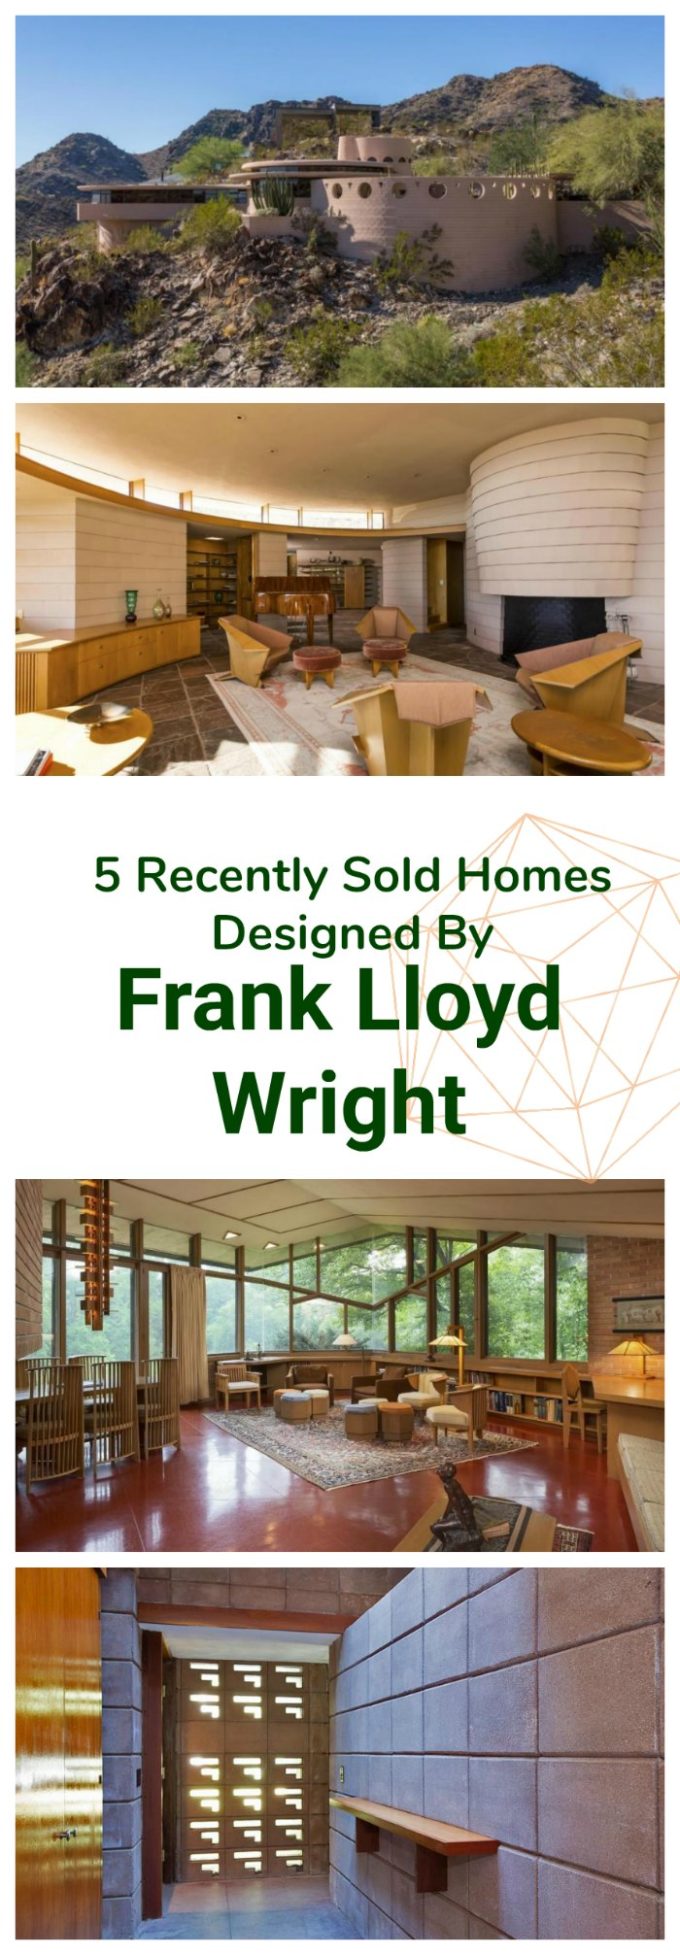 5 Homes Designed By Frank Lloyd Wright 